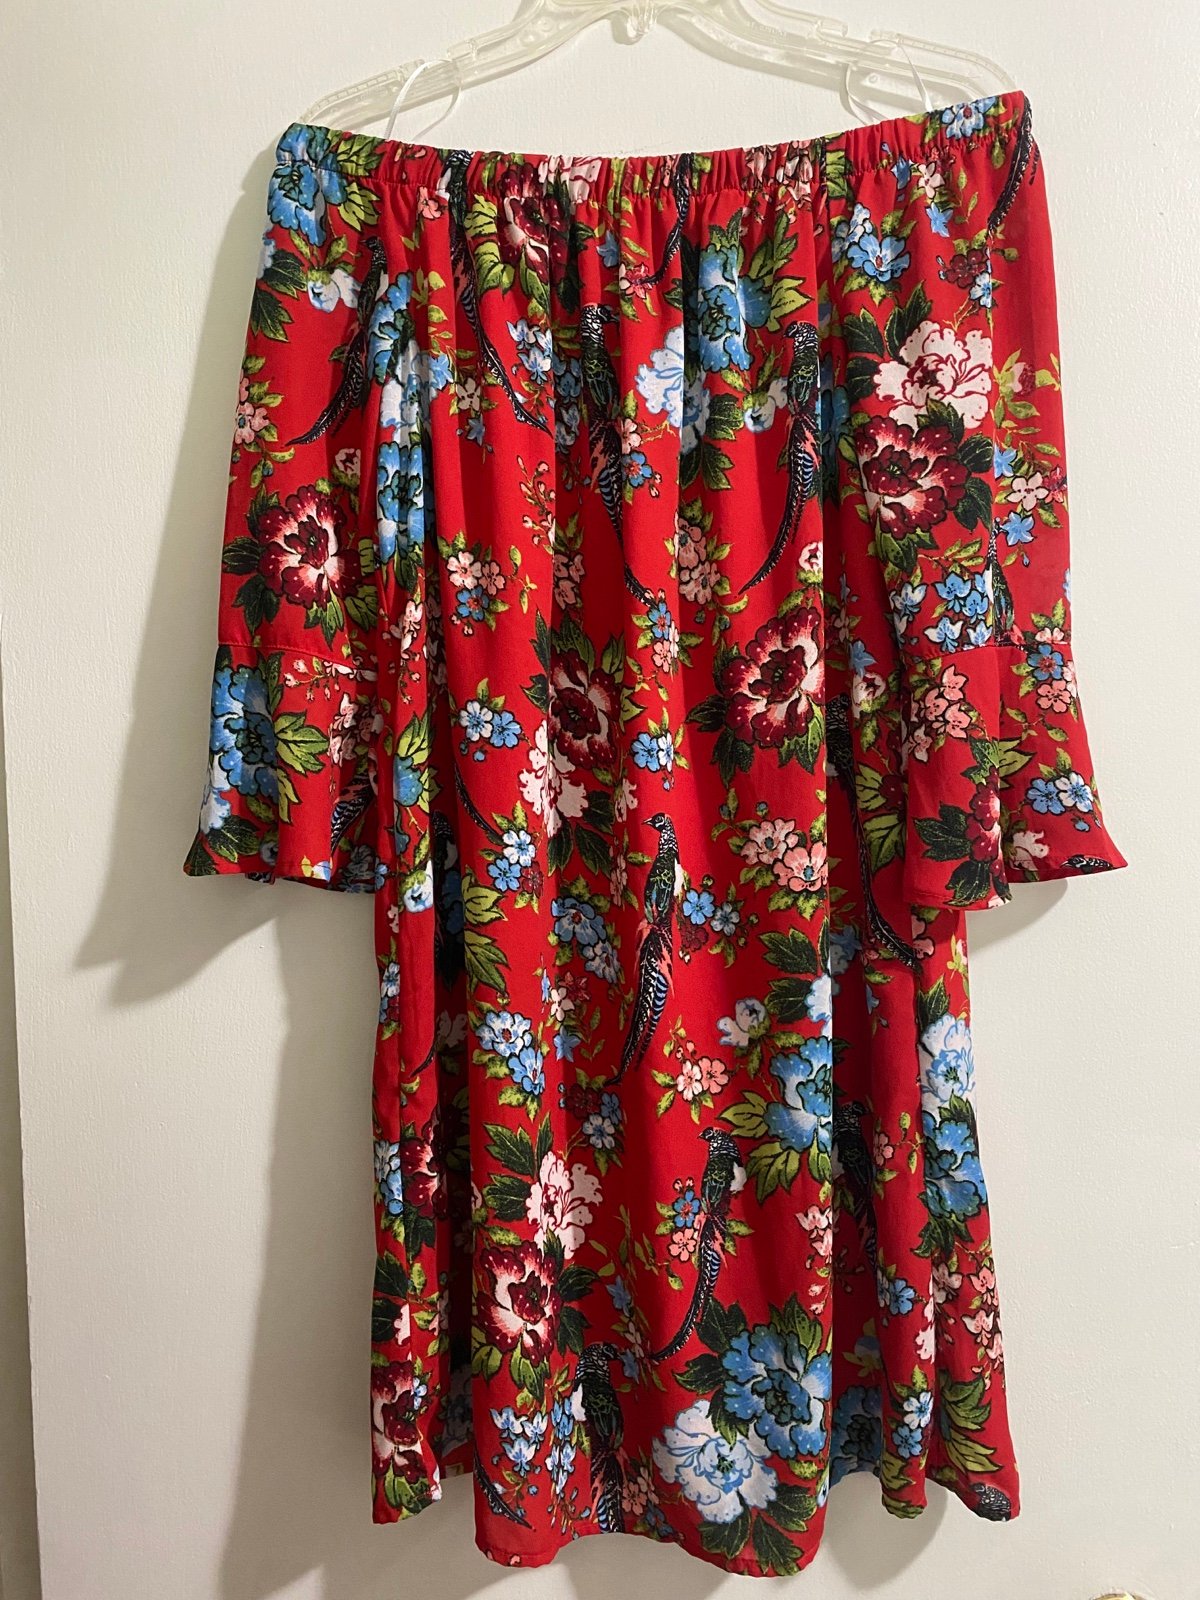 Custom Off-the-Shoulder Short Red Floral Dress LS85Lql9Q all for you